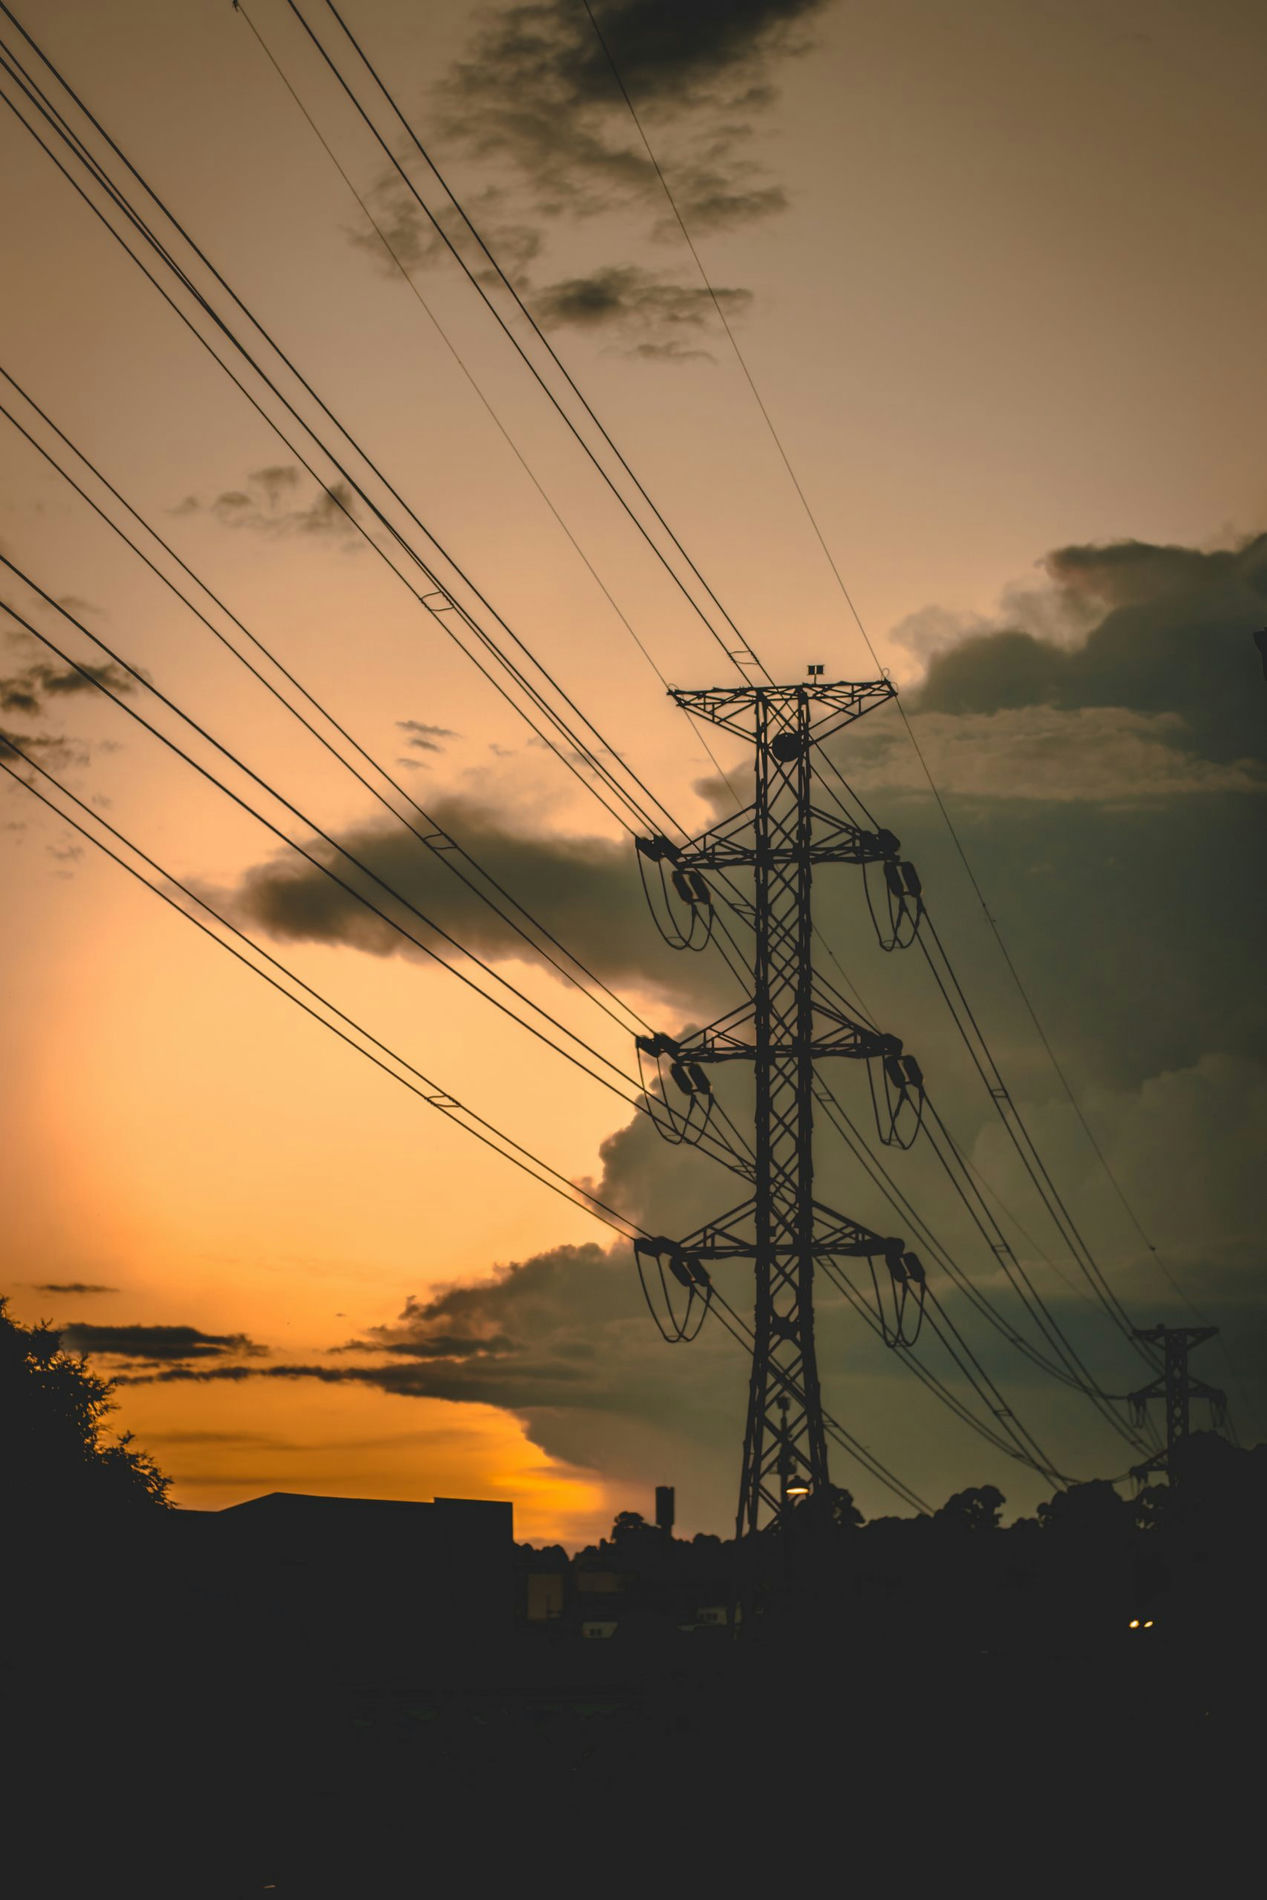 About RCM Energy Services Division transmission line